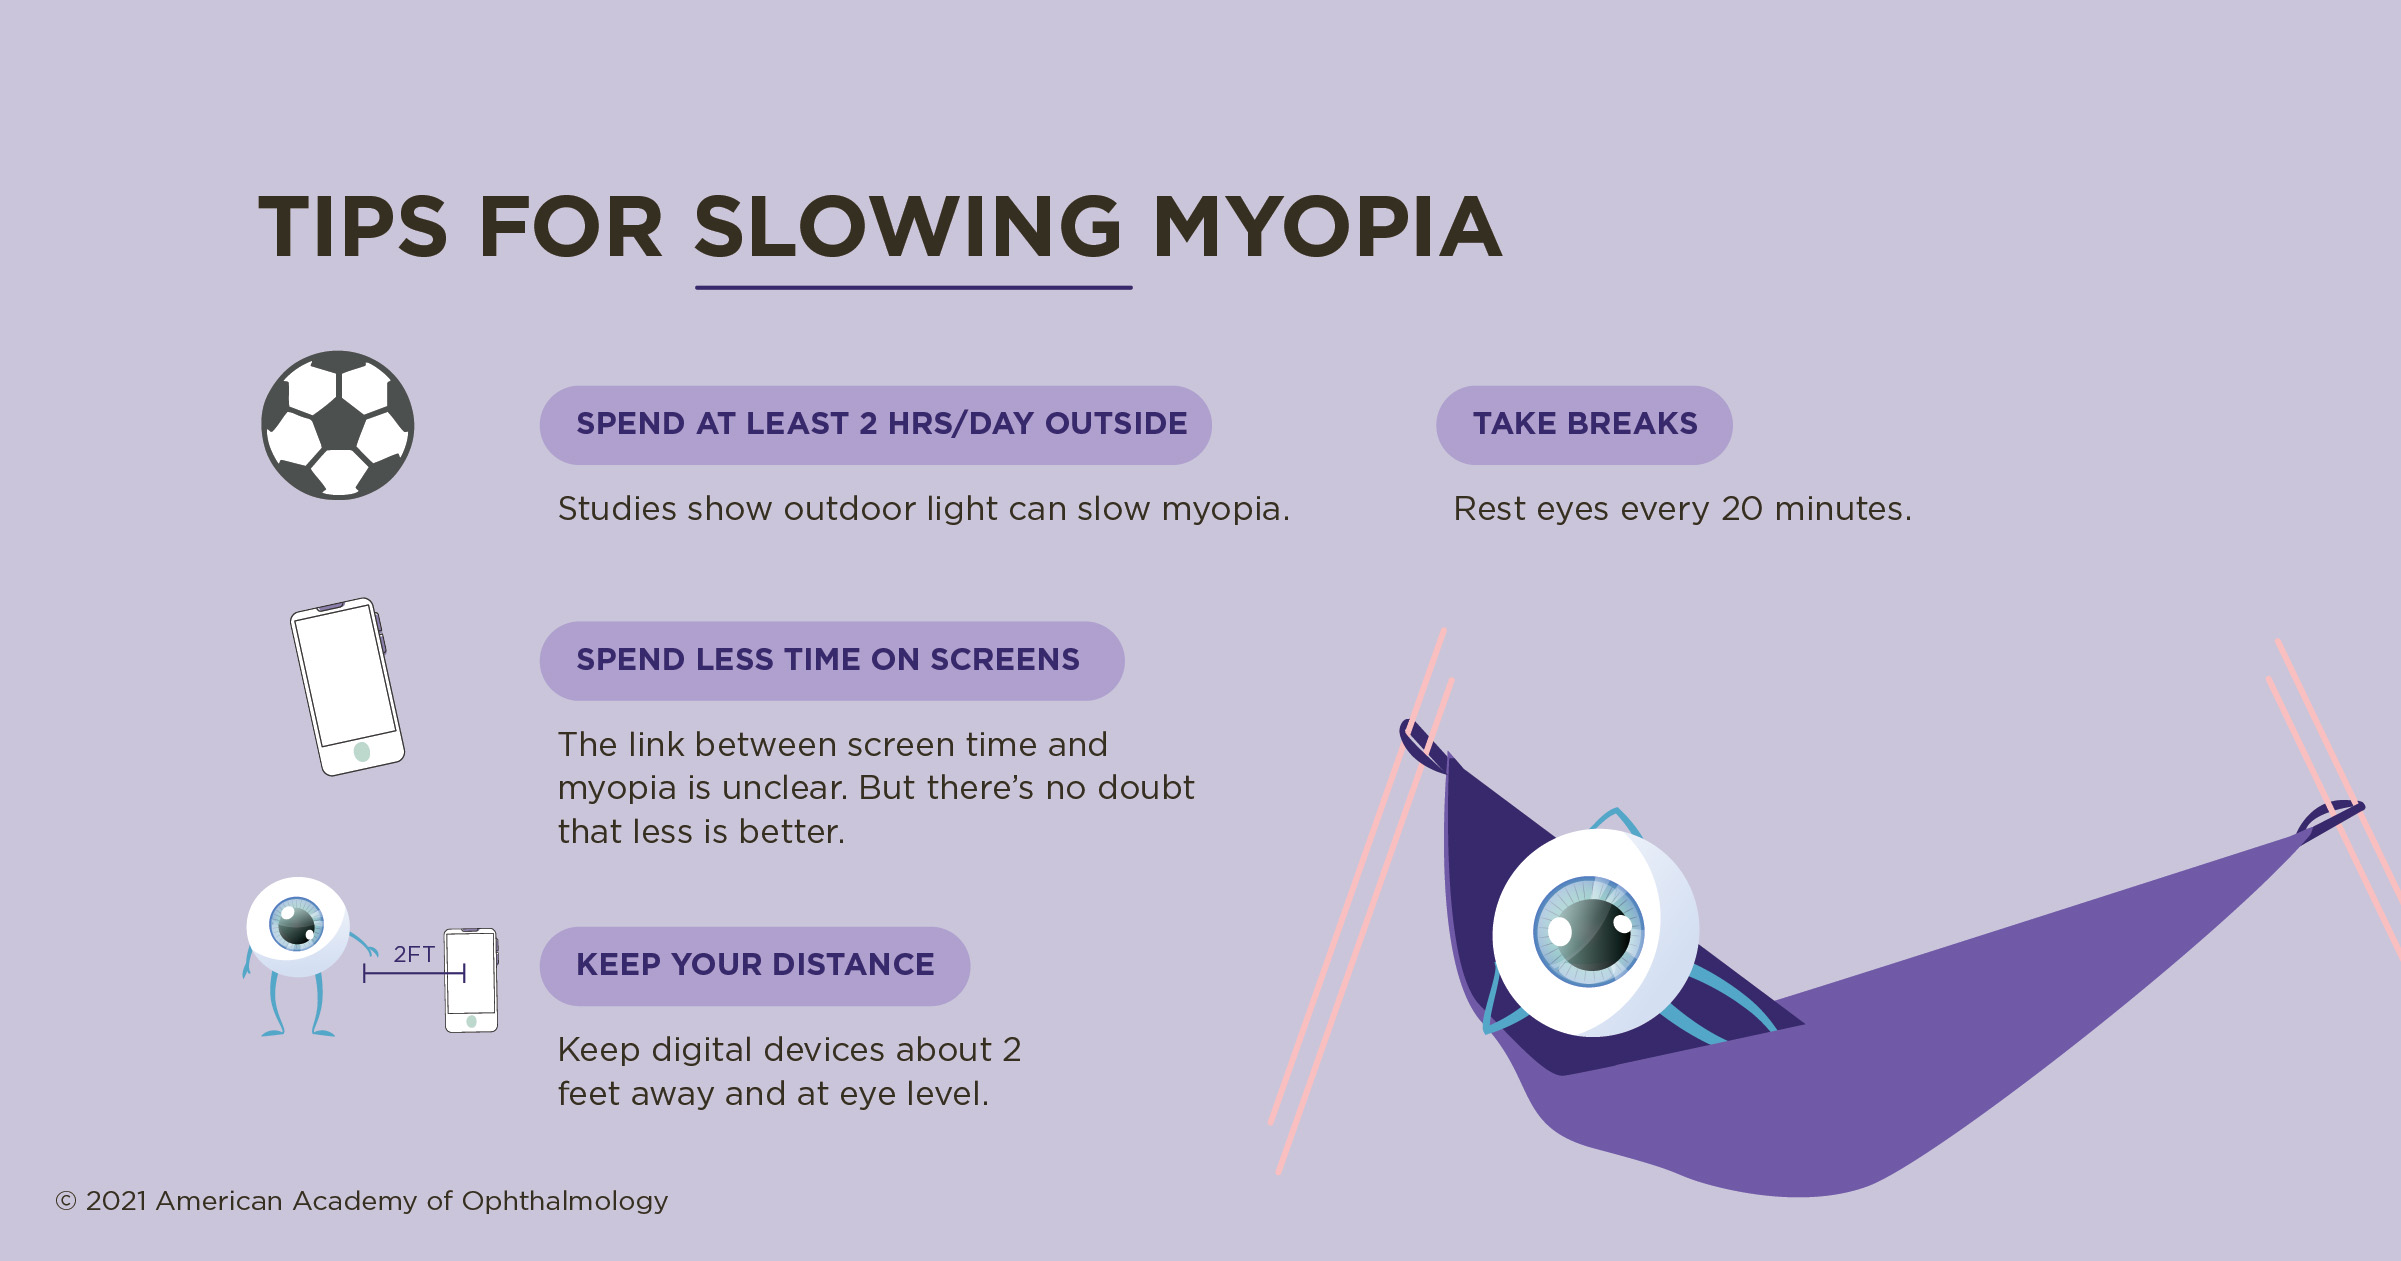 Tips for slowing myopia